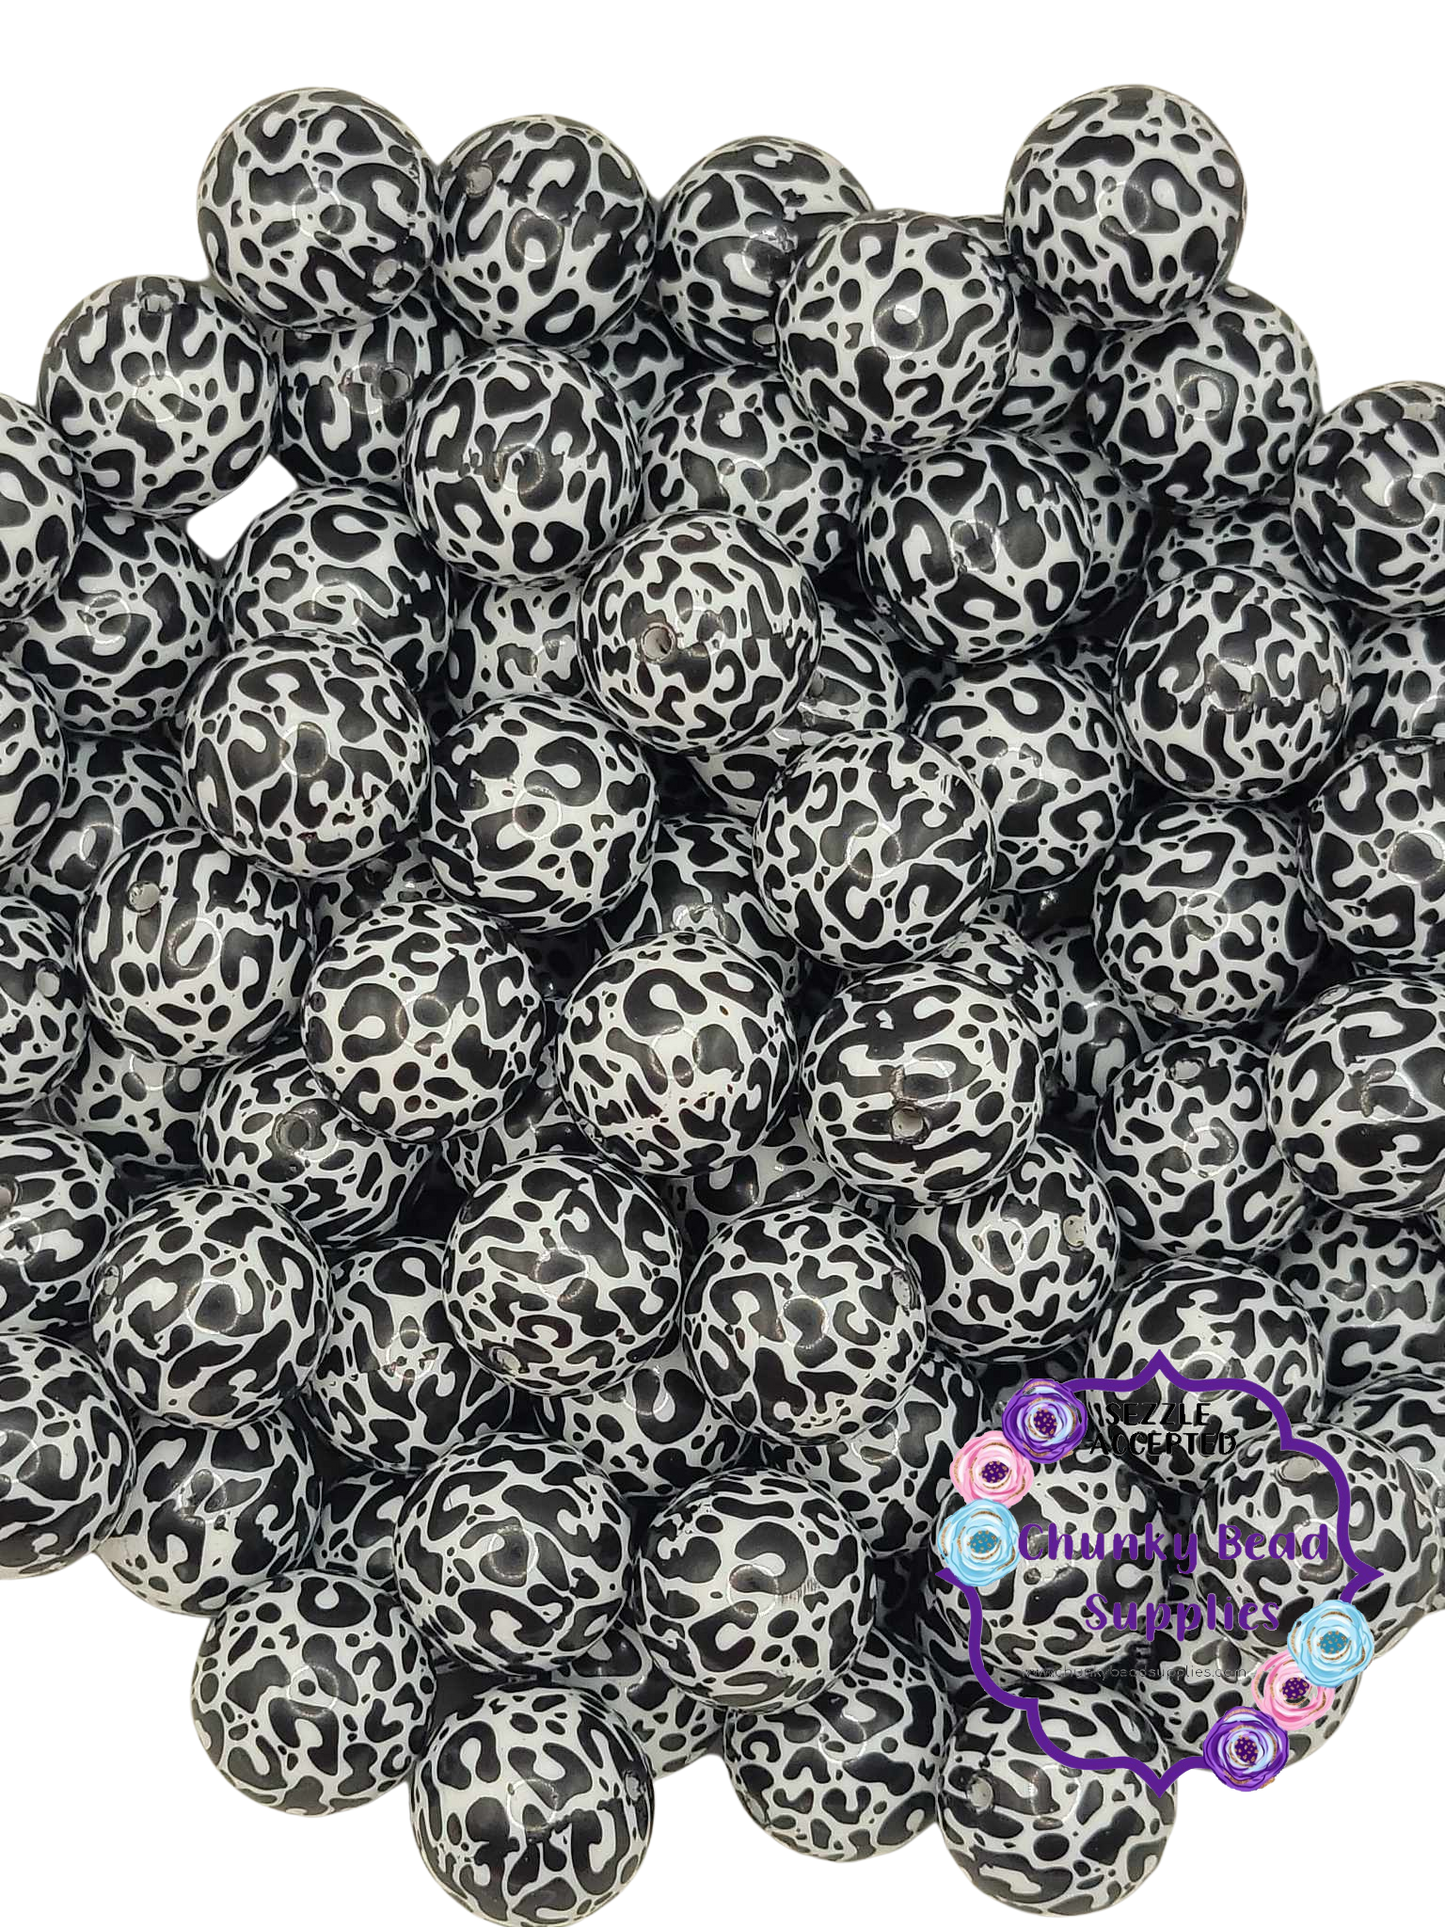 20mm "Leopard Black" Printed Acrylic Beads